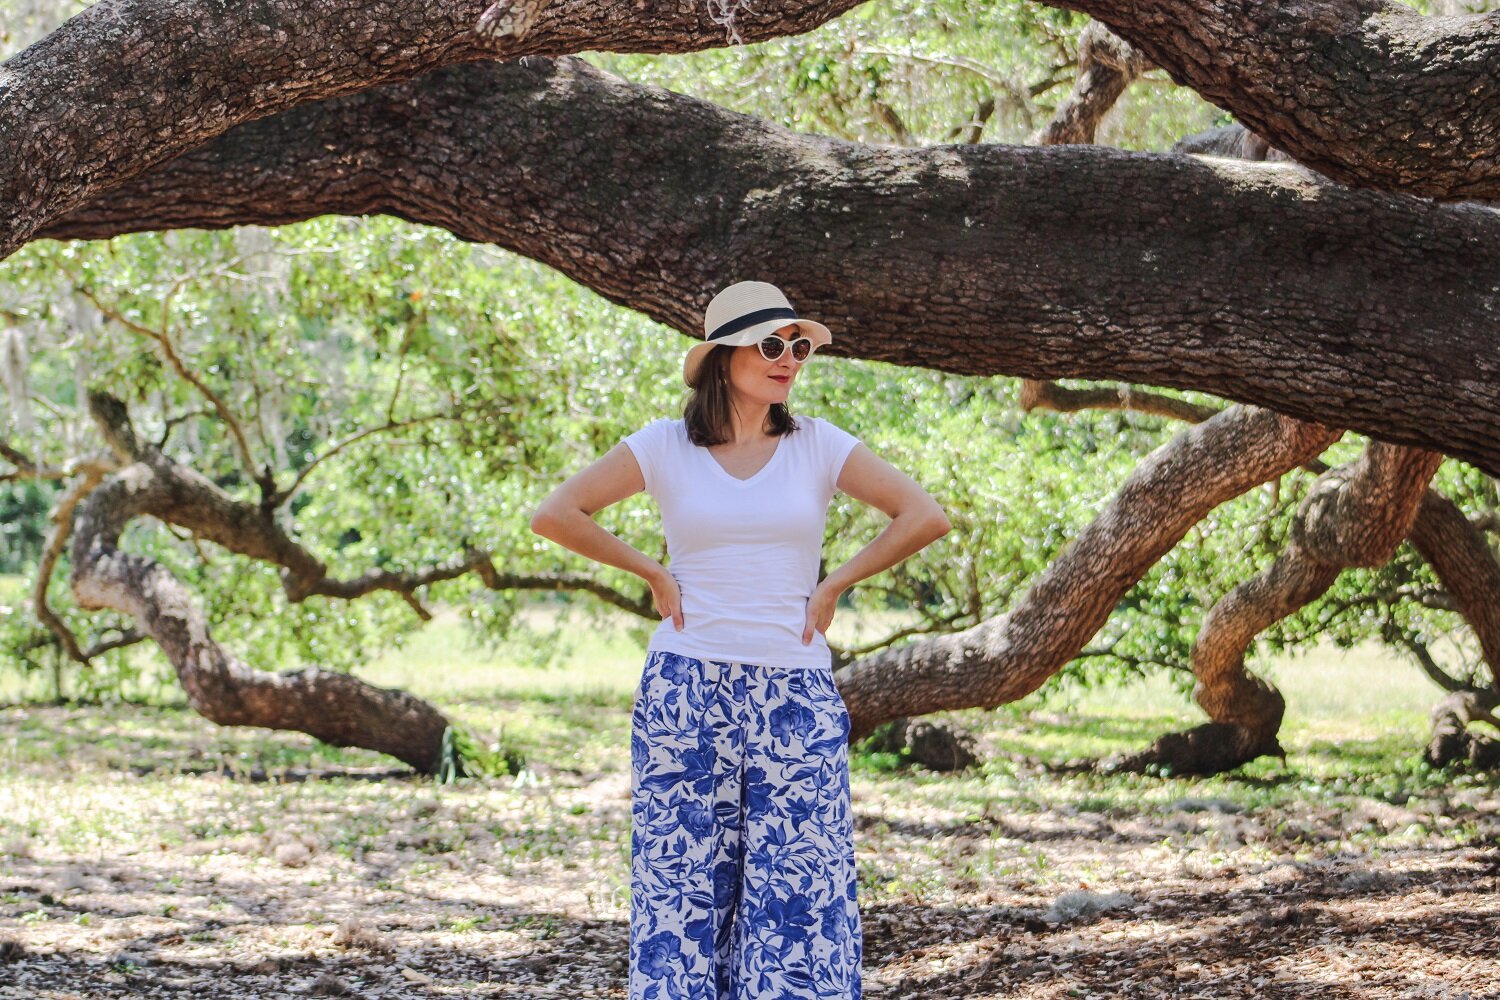 Our favorite Tampa Bay parks to visit | Blooming Magnolias Blog | Travel